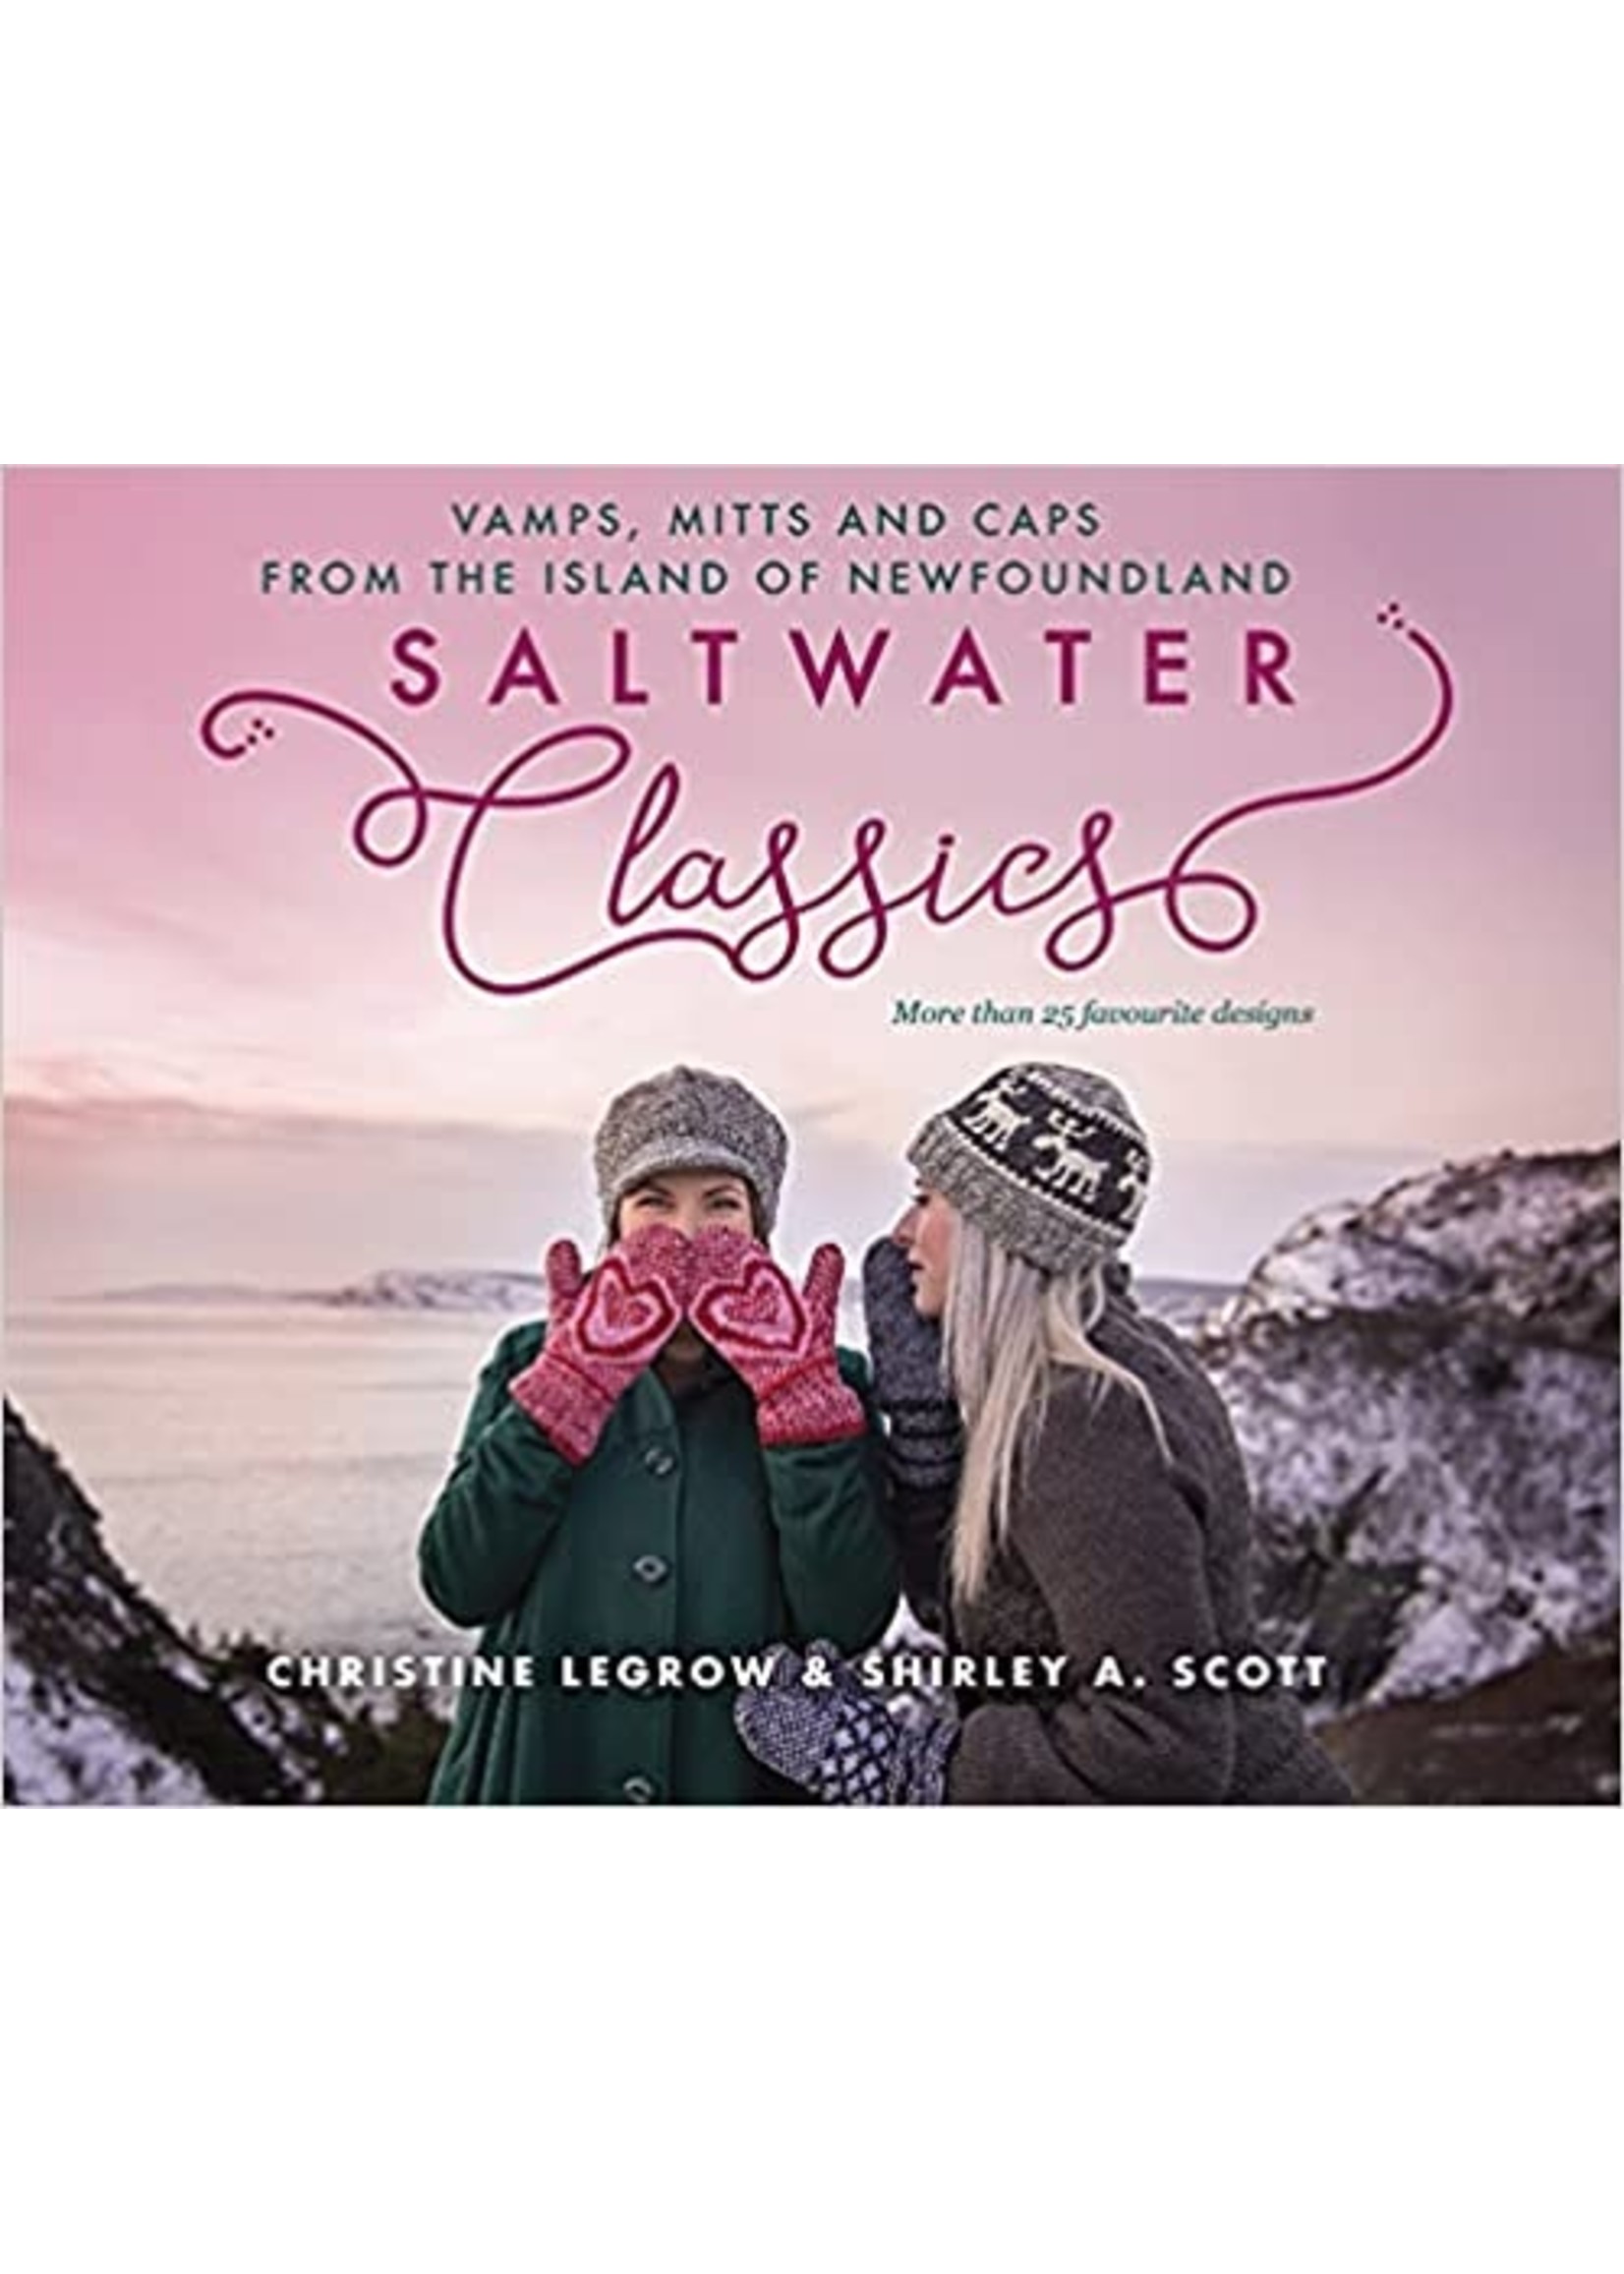 Boulder Saltwater Classics book